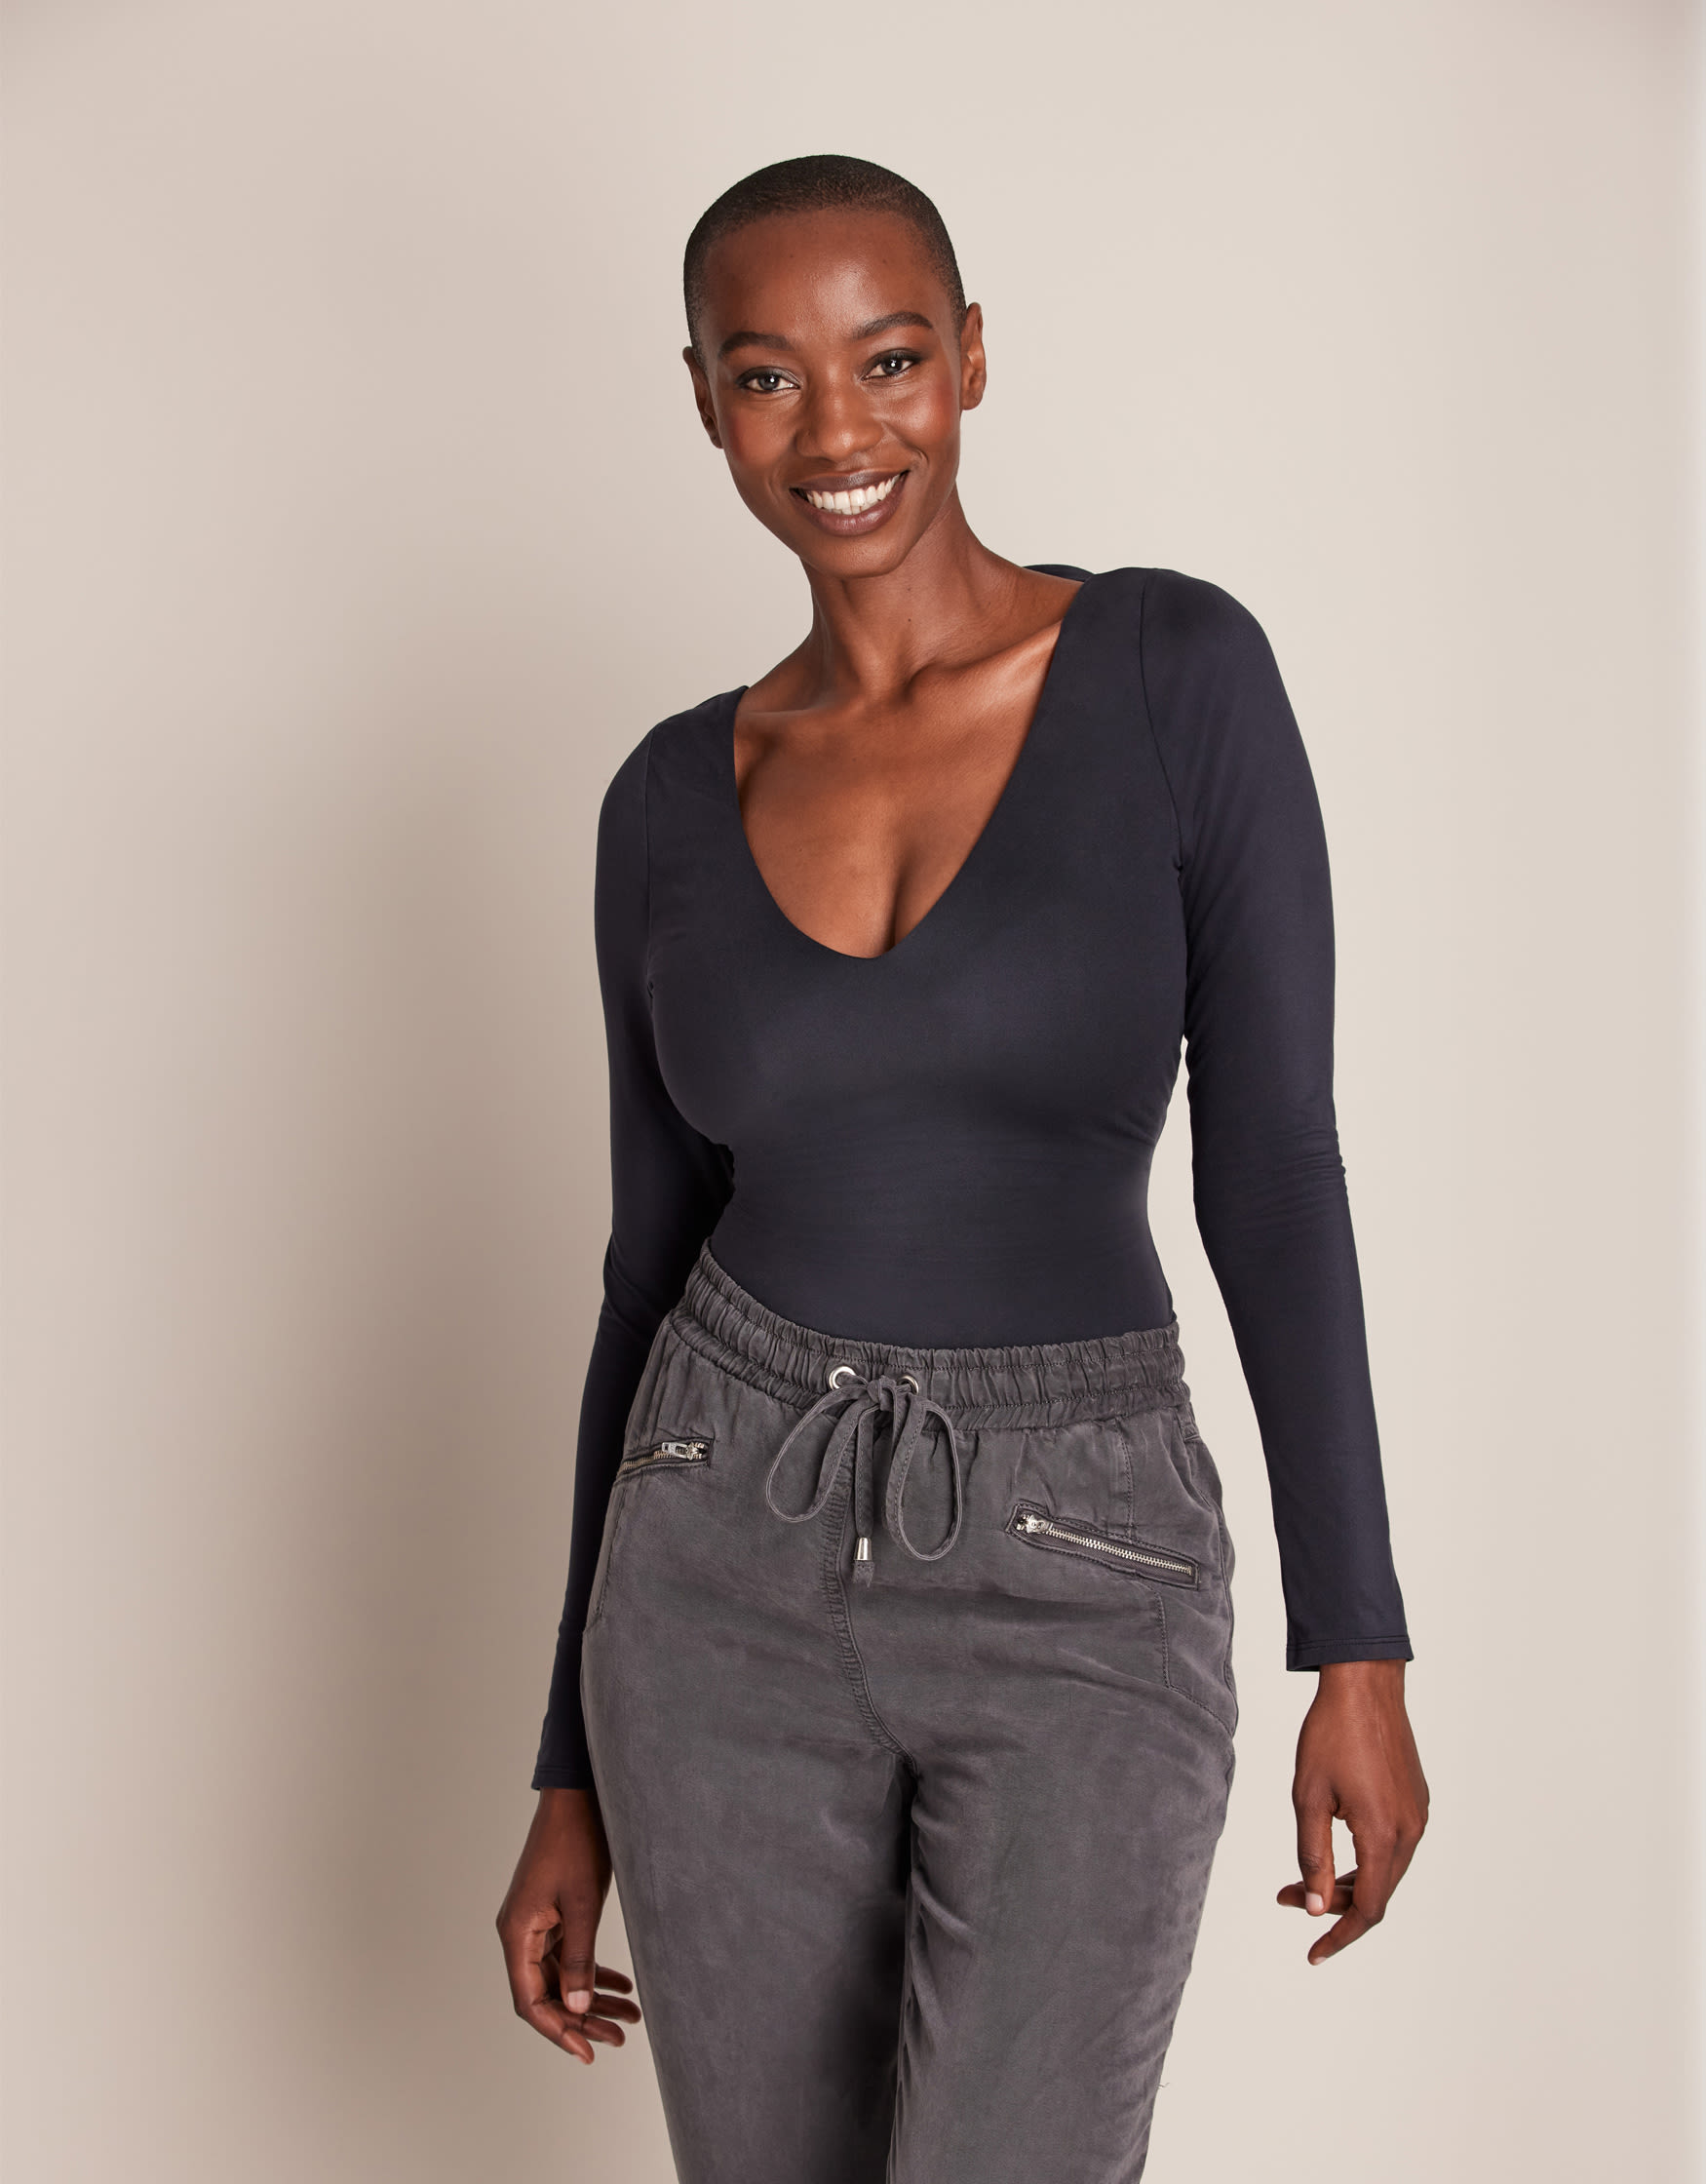 Women's Black Bodysuits - Strapless, Lace & Long Sleeve Bodysuits - Express